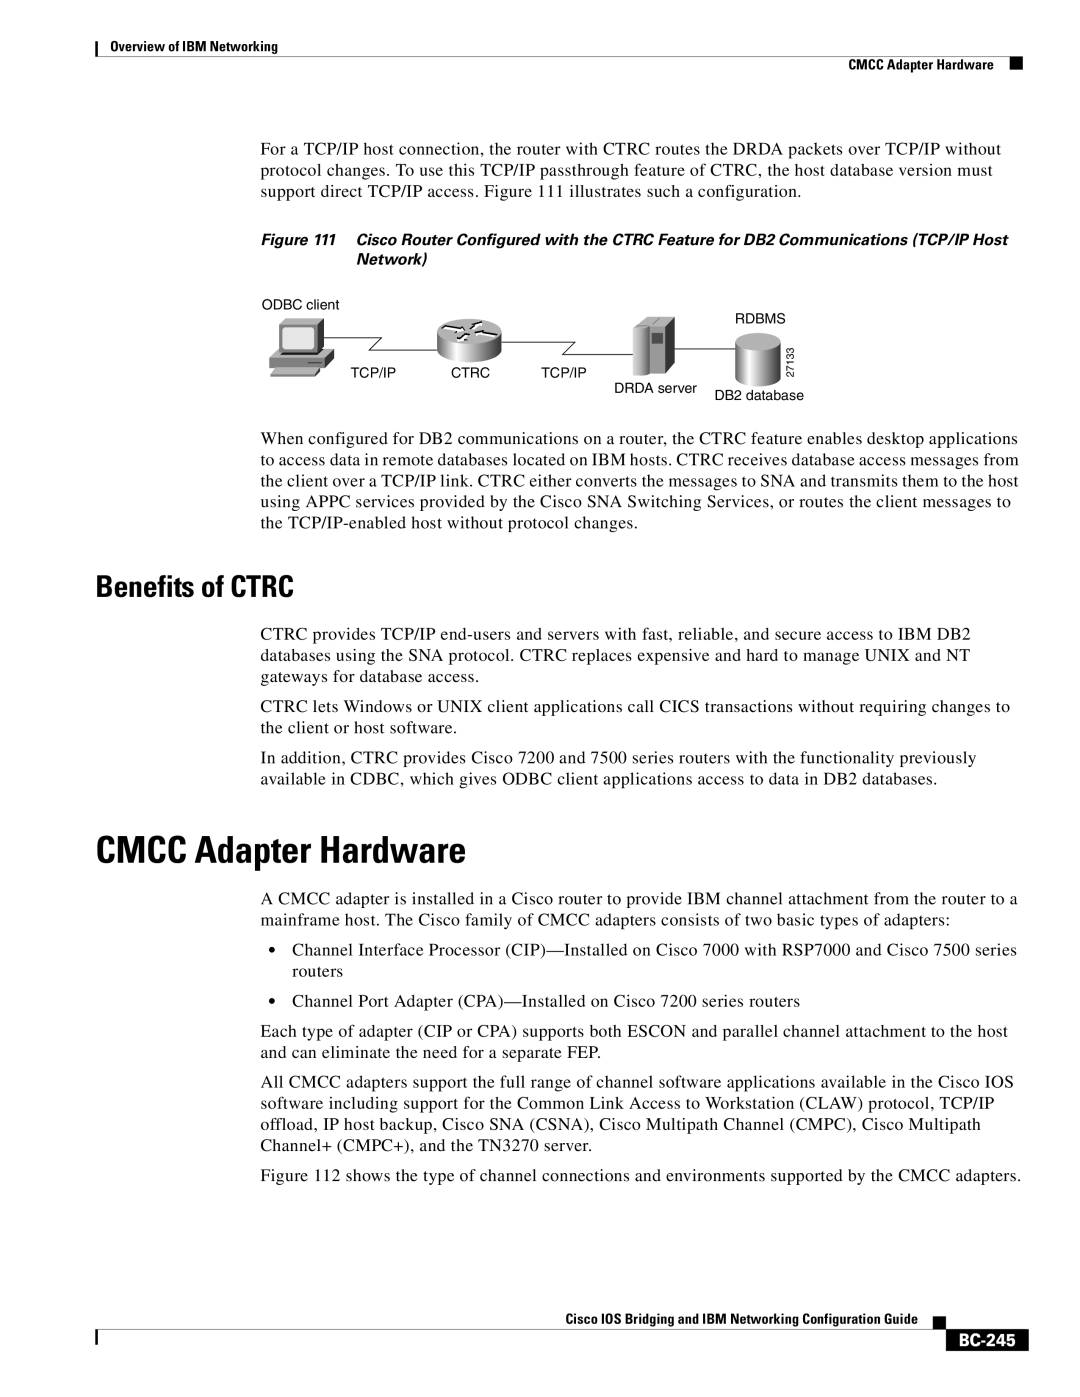 IBM BC-203 manual CMCC Adapter Hardware, Benefits of CTRC, BC-245 